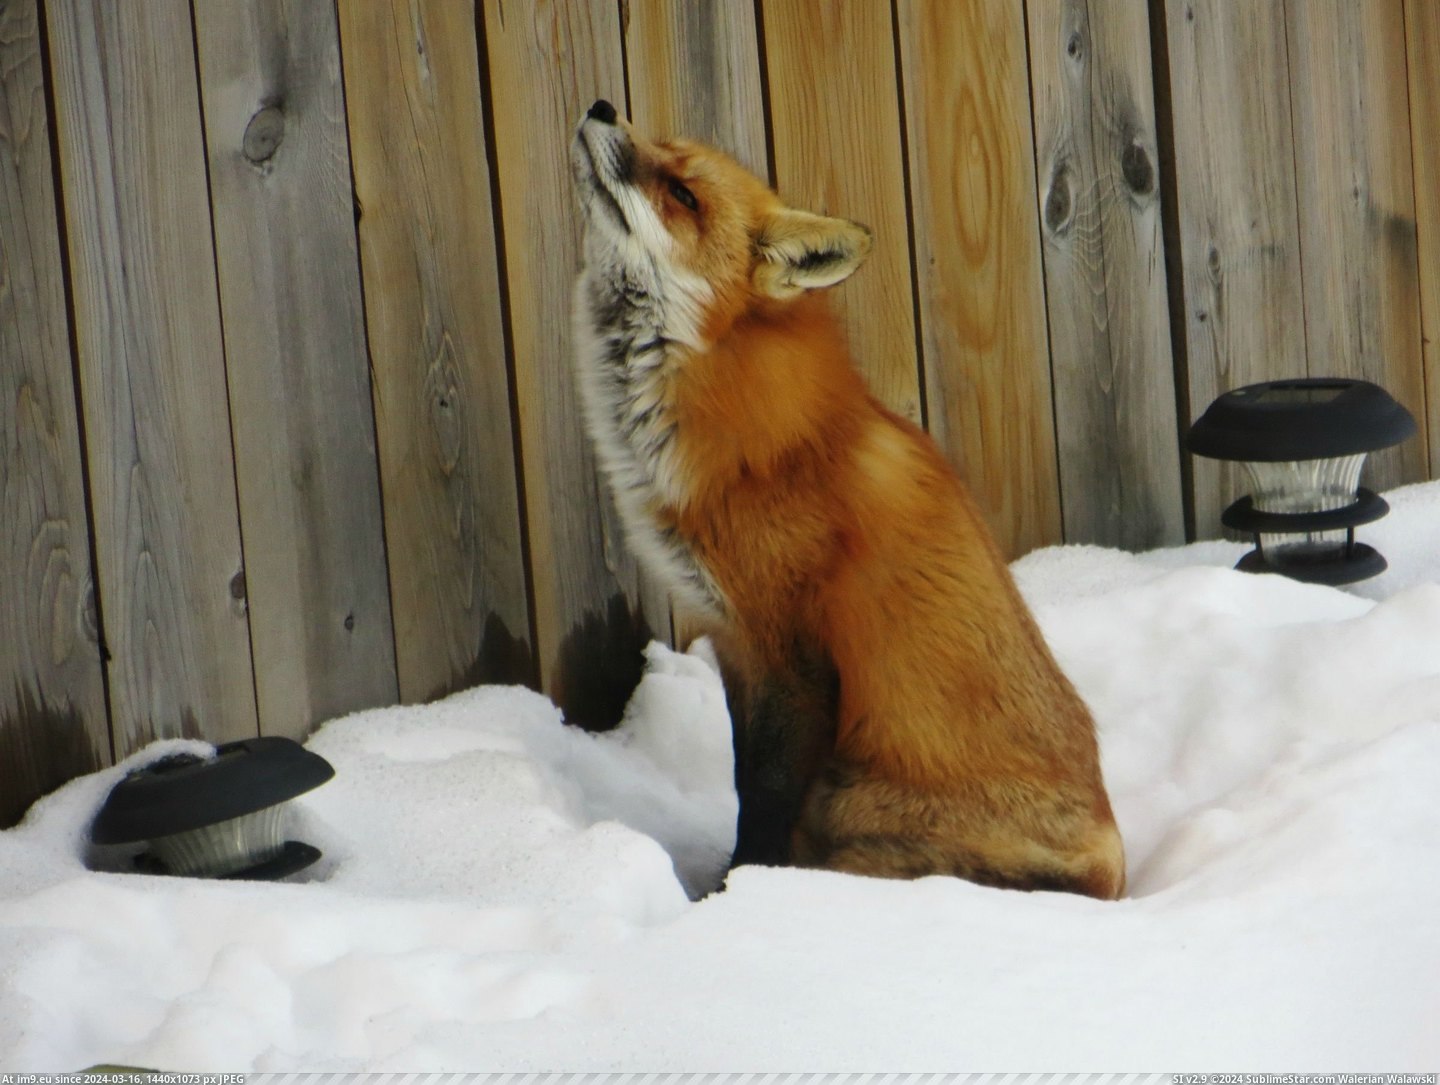 #Red #Canada #Alberta #Backyard #Fox #Sleeping [Pics] Red fox sleeping in my backyard! Alberta, Canada. 3 Pic. (Image of album My r/PICS favs))